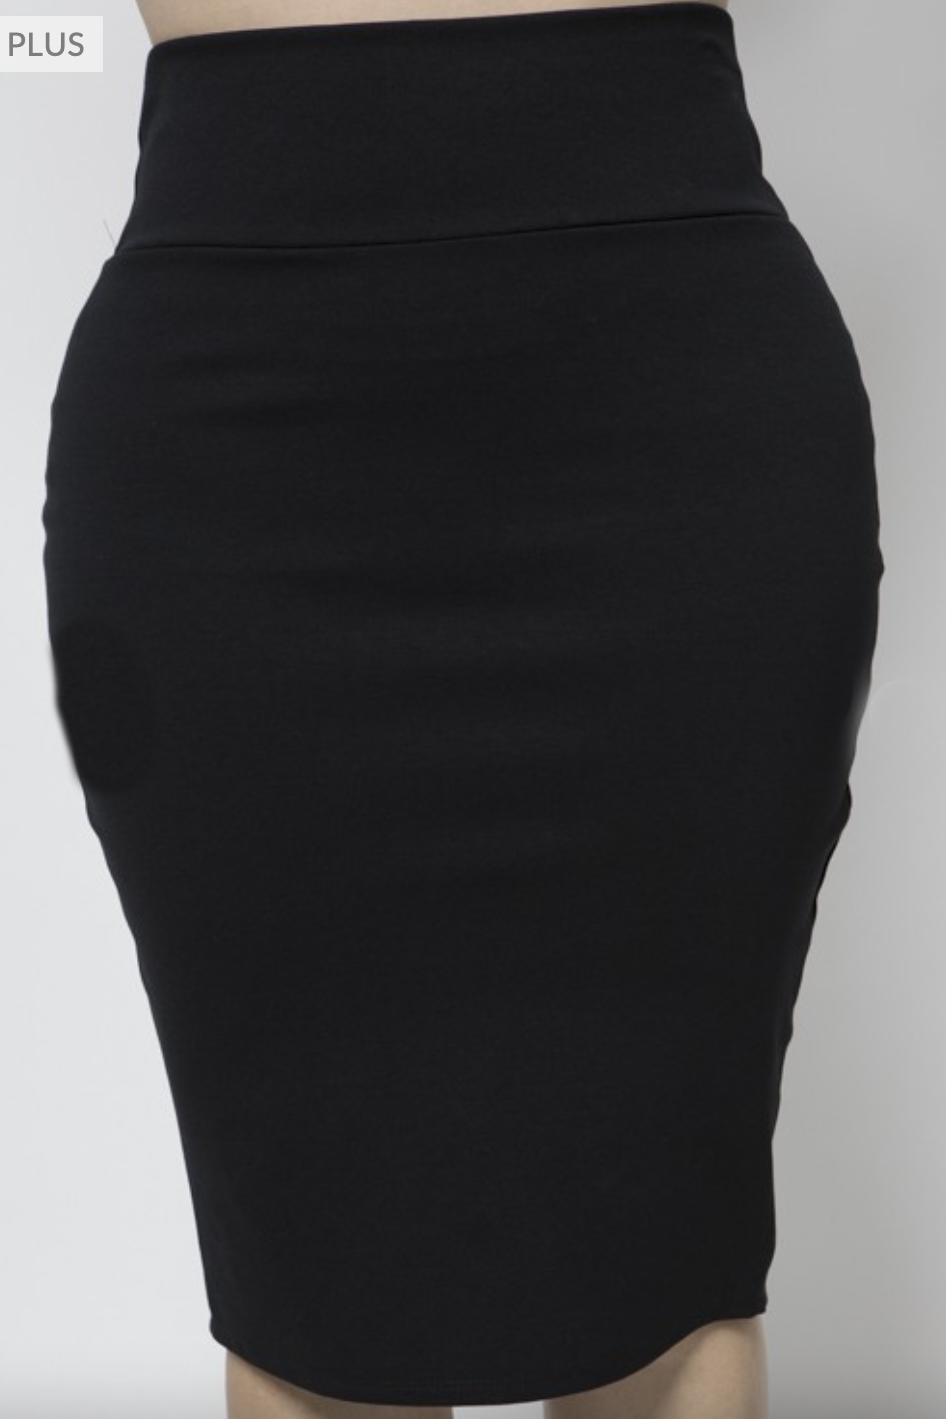 Glow Fashion Boutique Plus Size Black Pencil Skirt